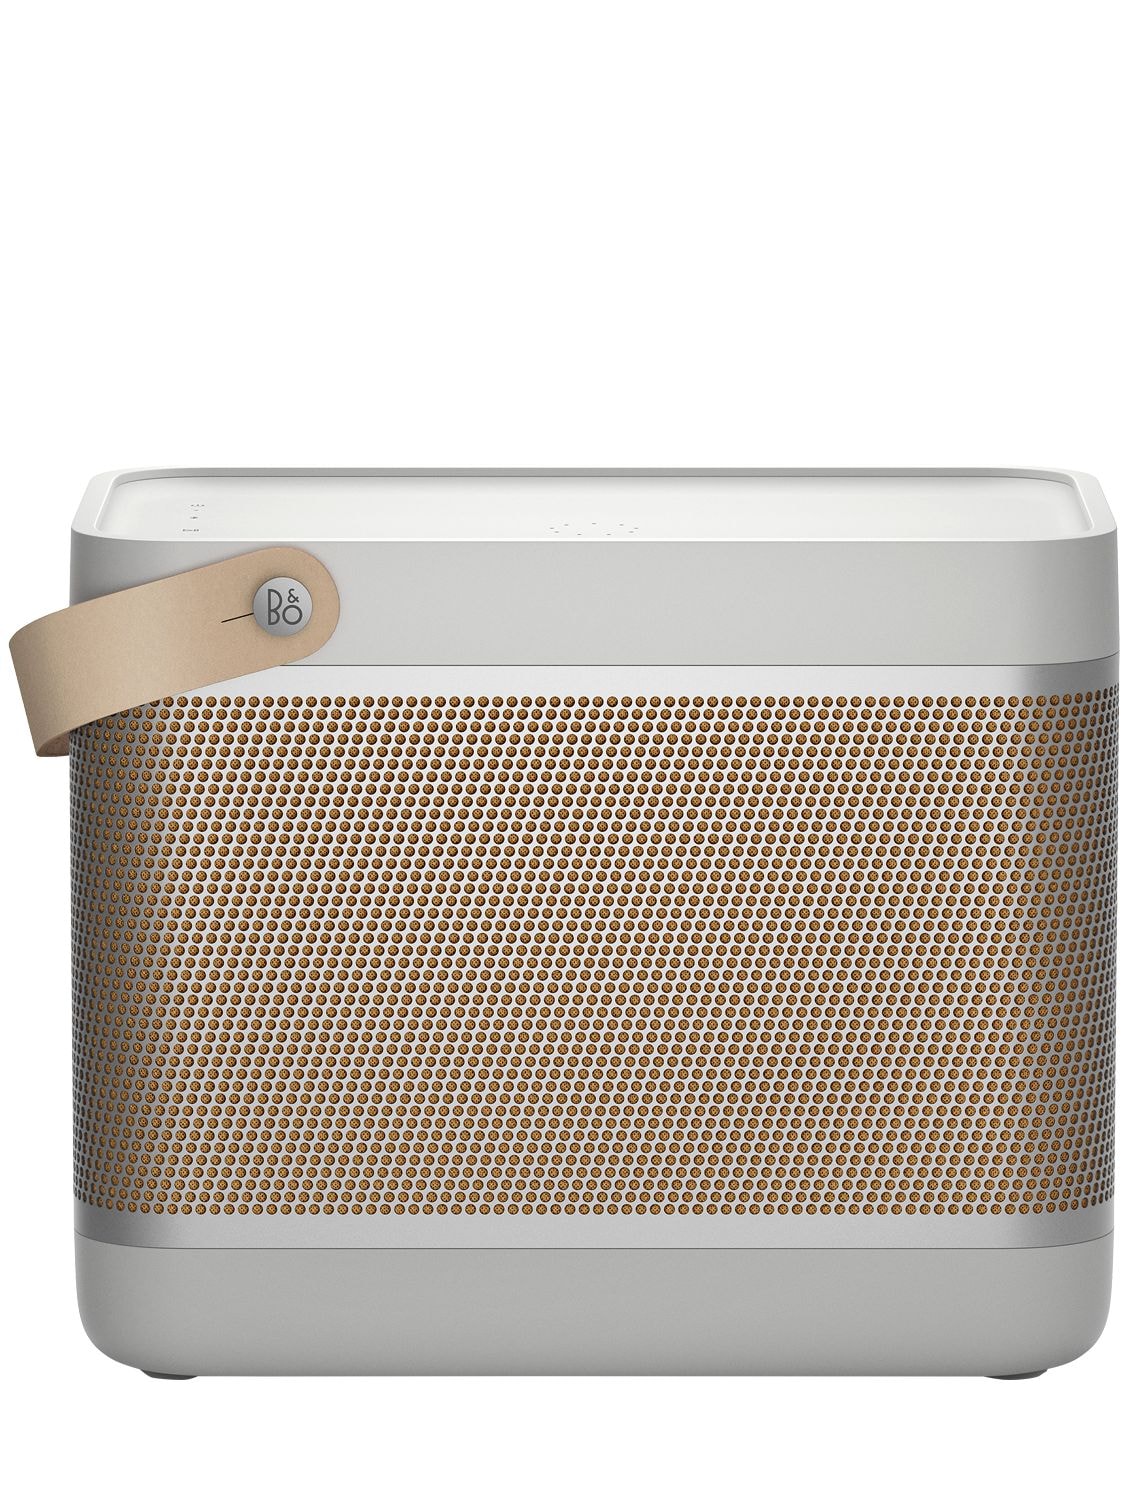 Image of Beolit 20 Portable Speaker